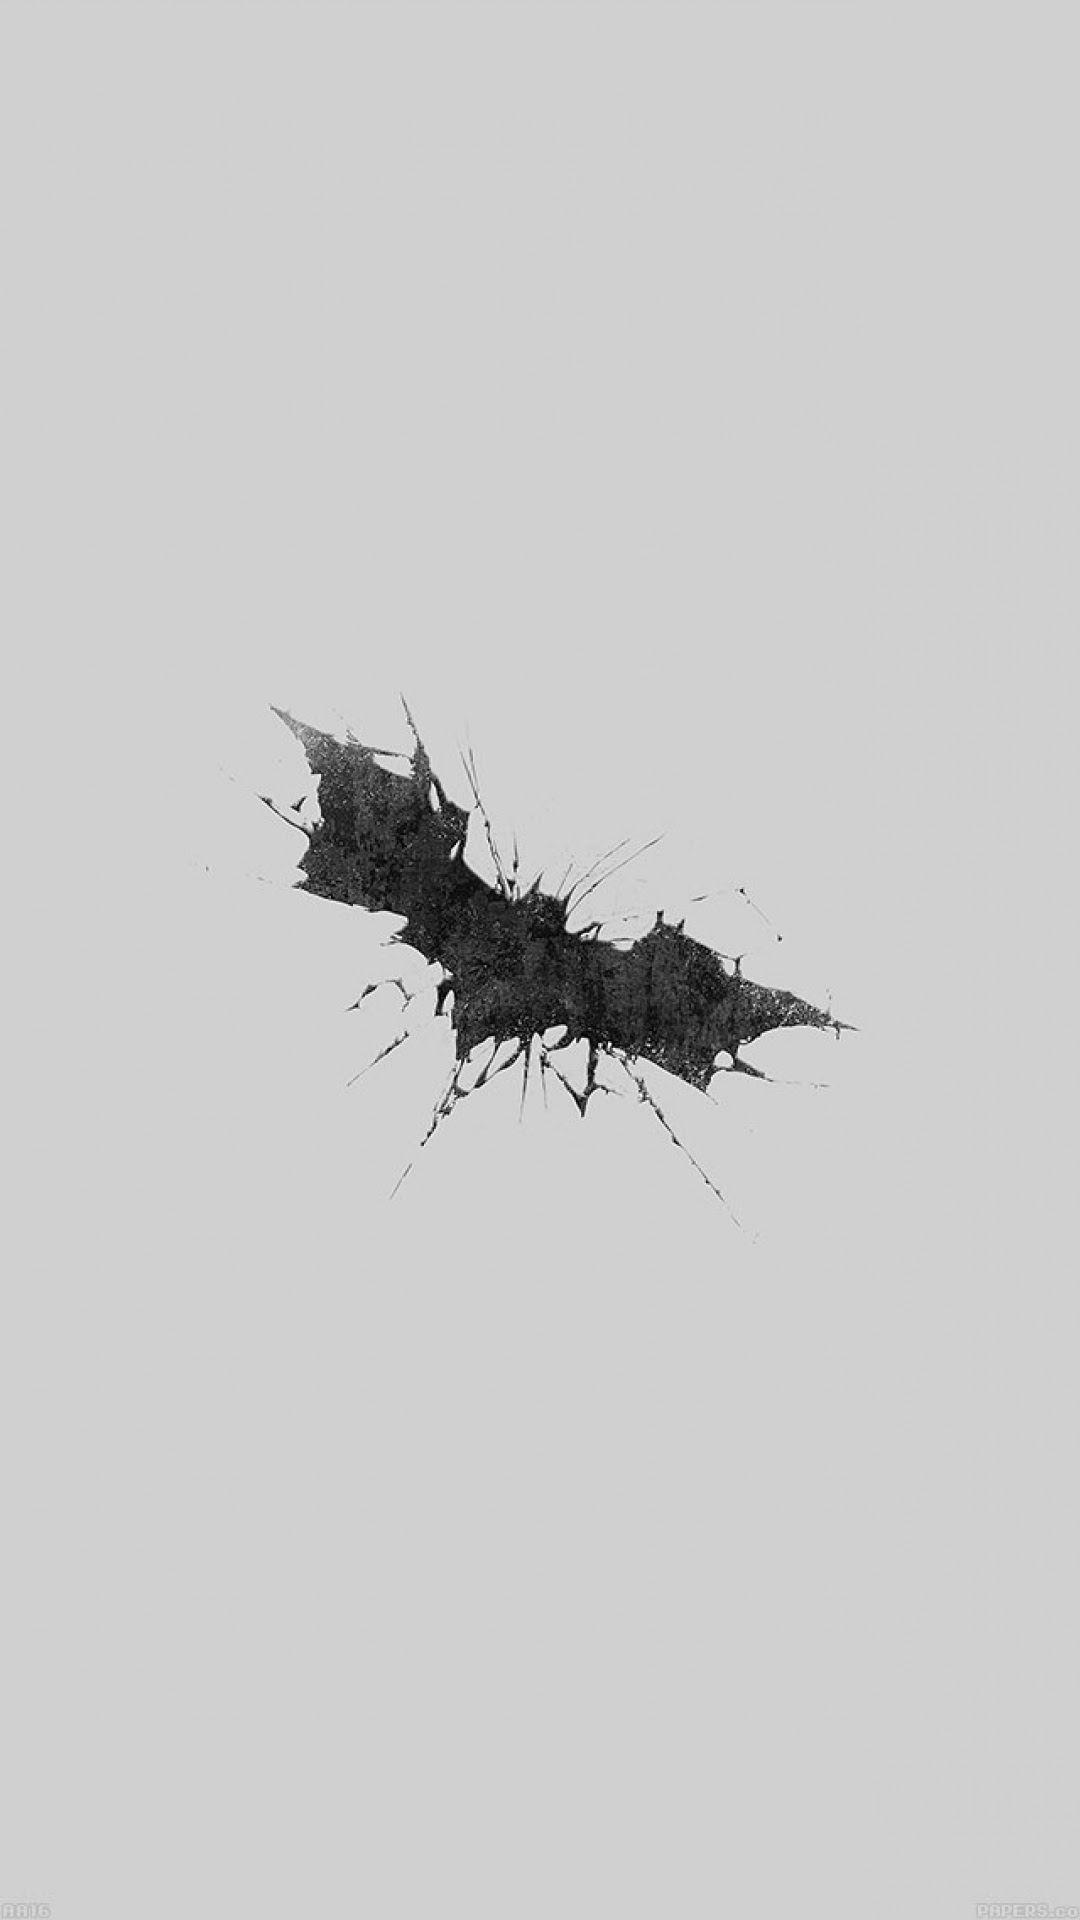 Download Batman shattered logo 1080 x 1920 Wallpaper